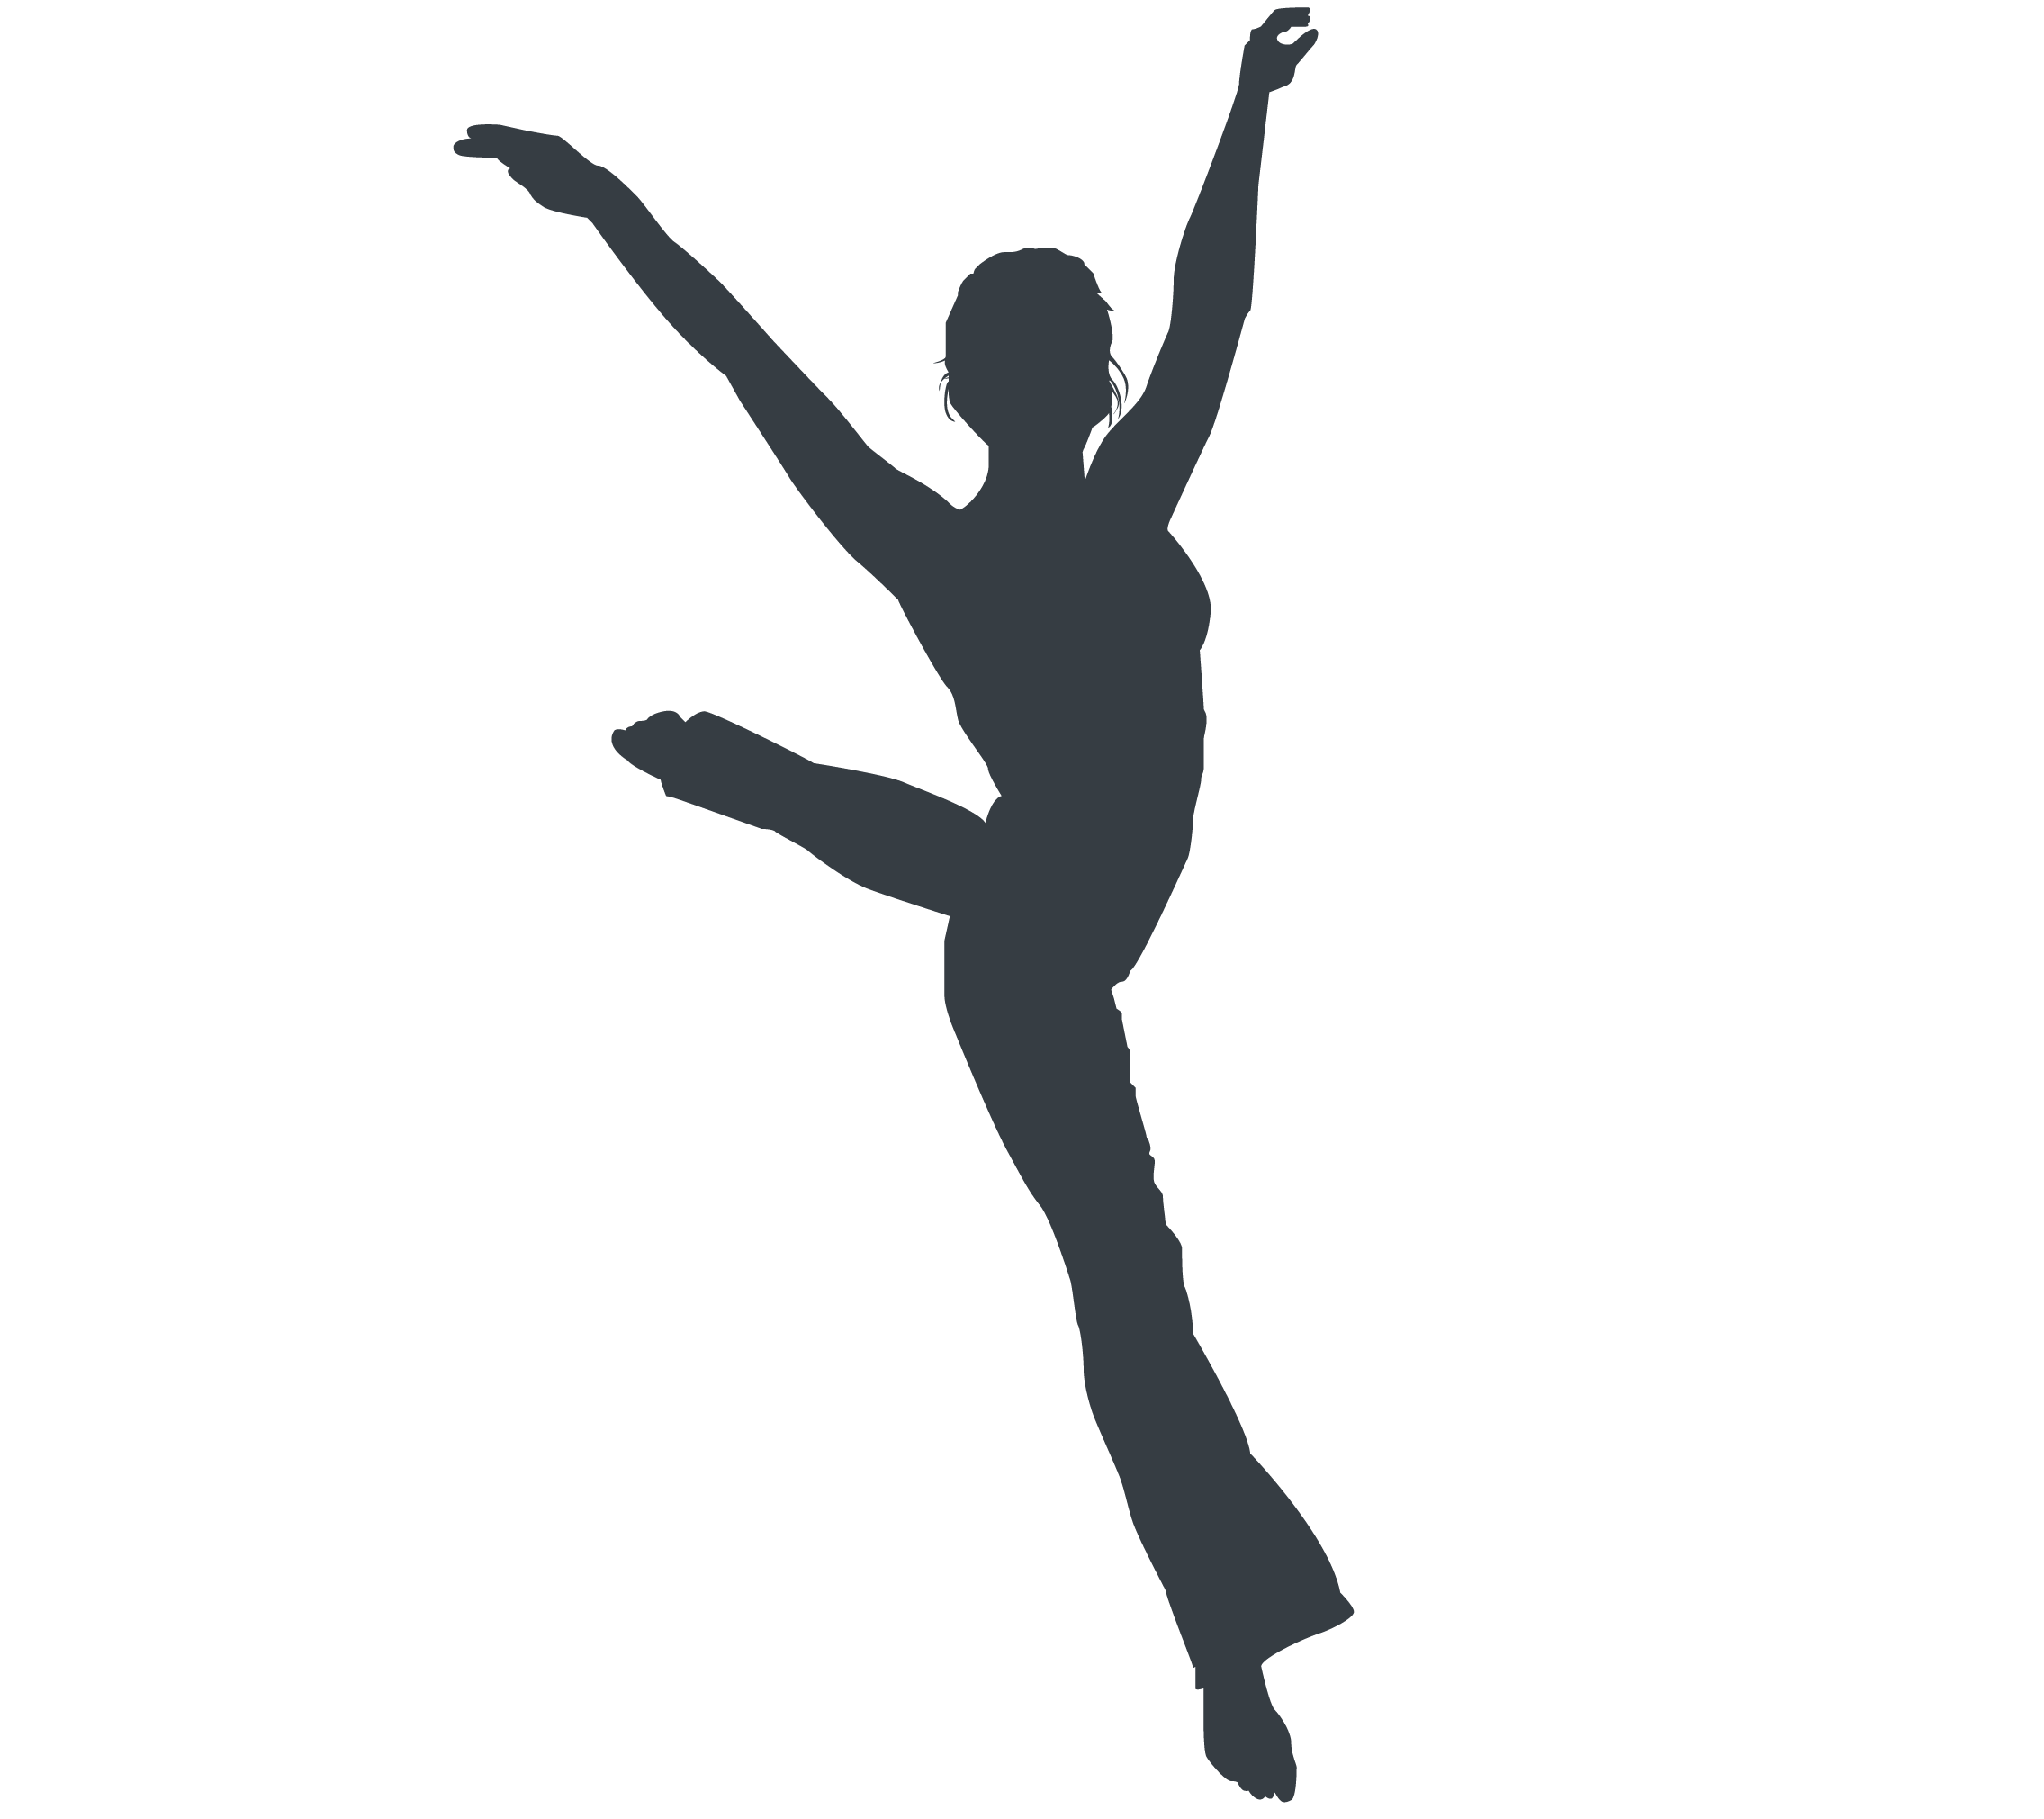 Athlete silhouette